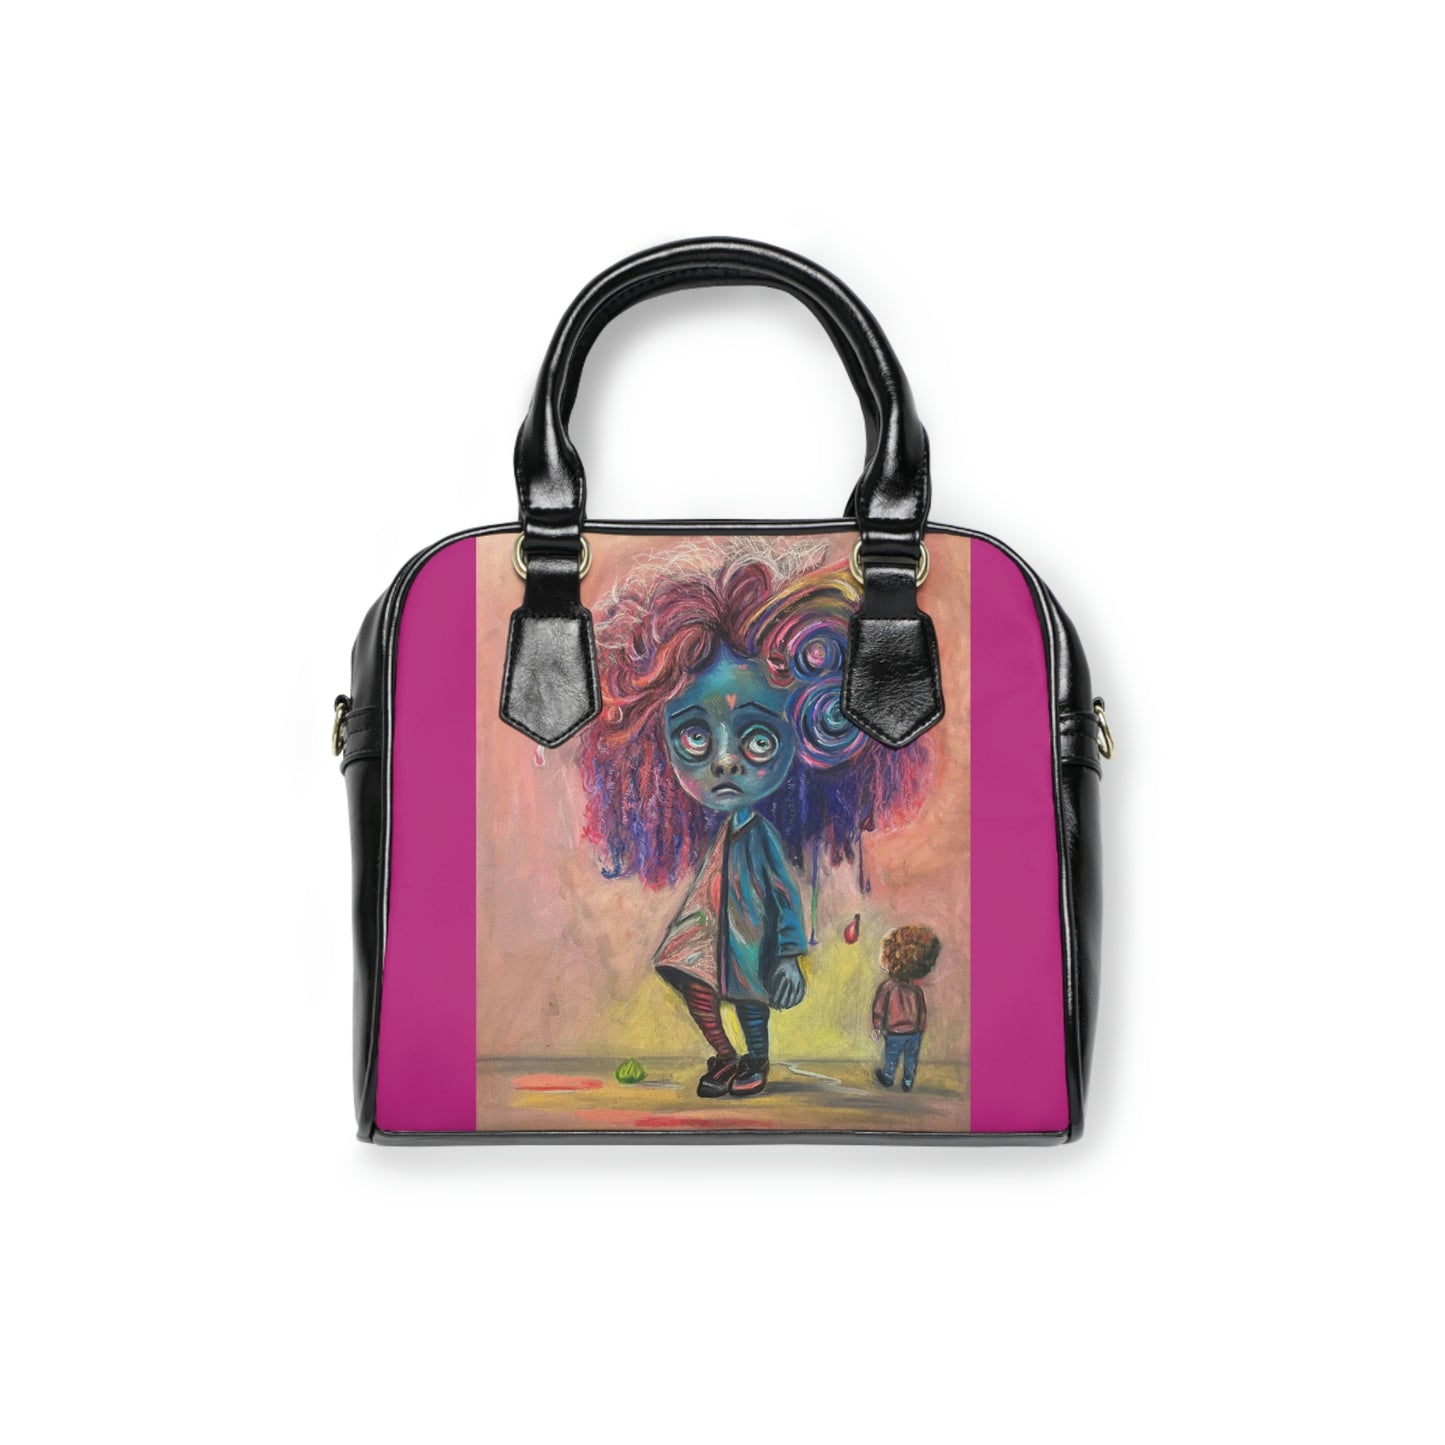 Artistic Shoulder Handbag